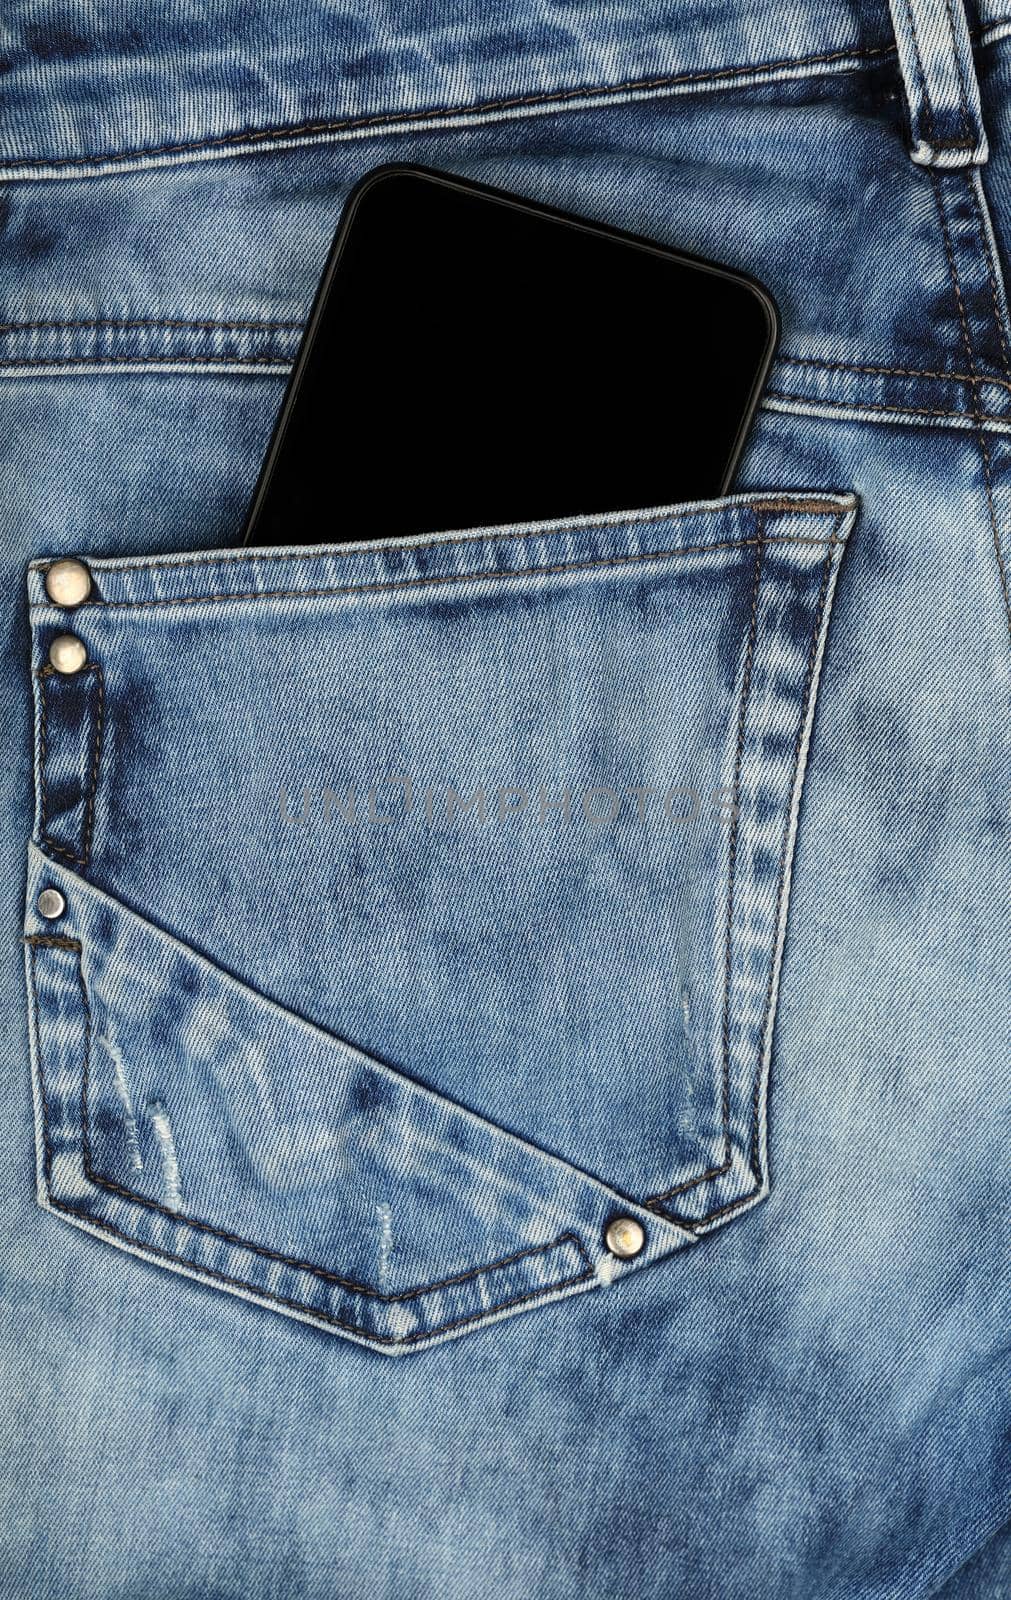 Black smartphone in jeans back pocket by jatmikaV